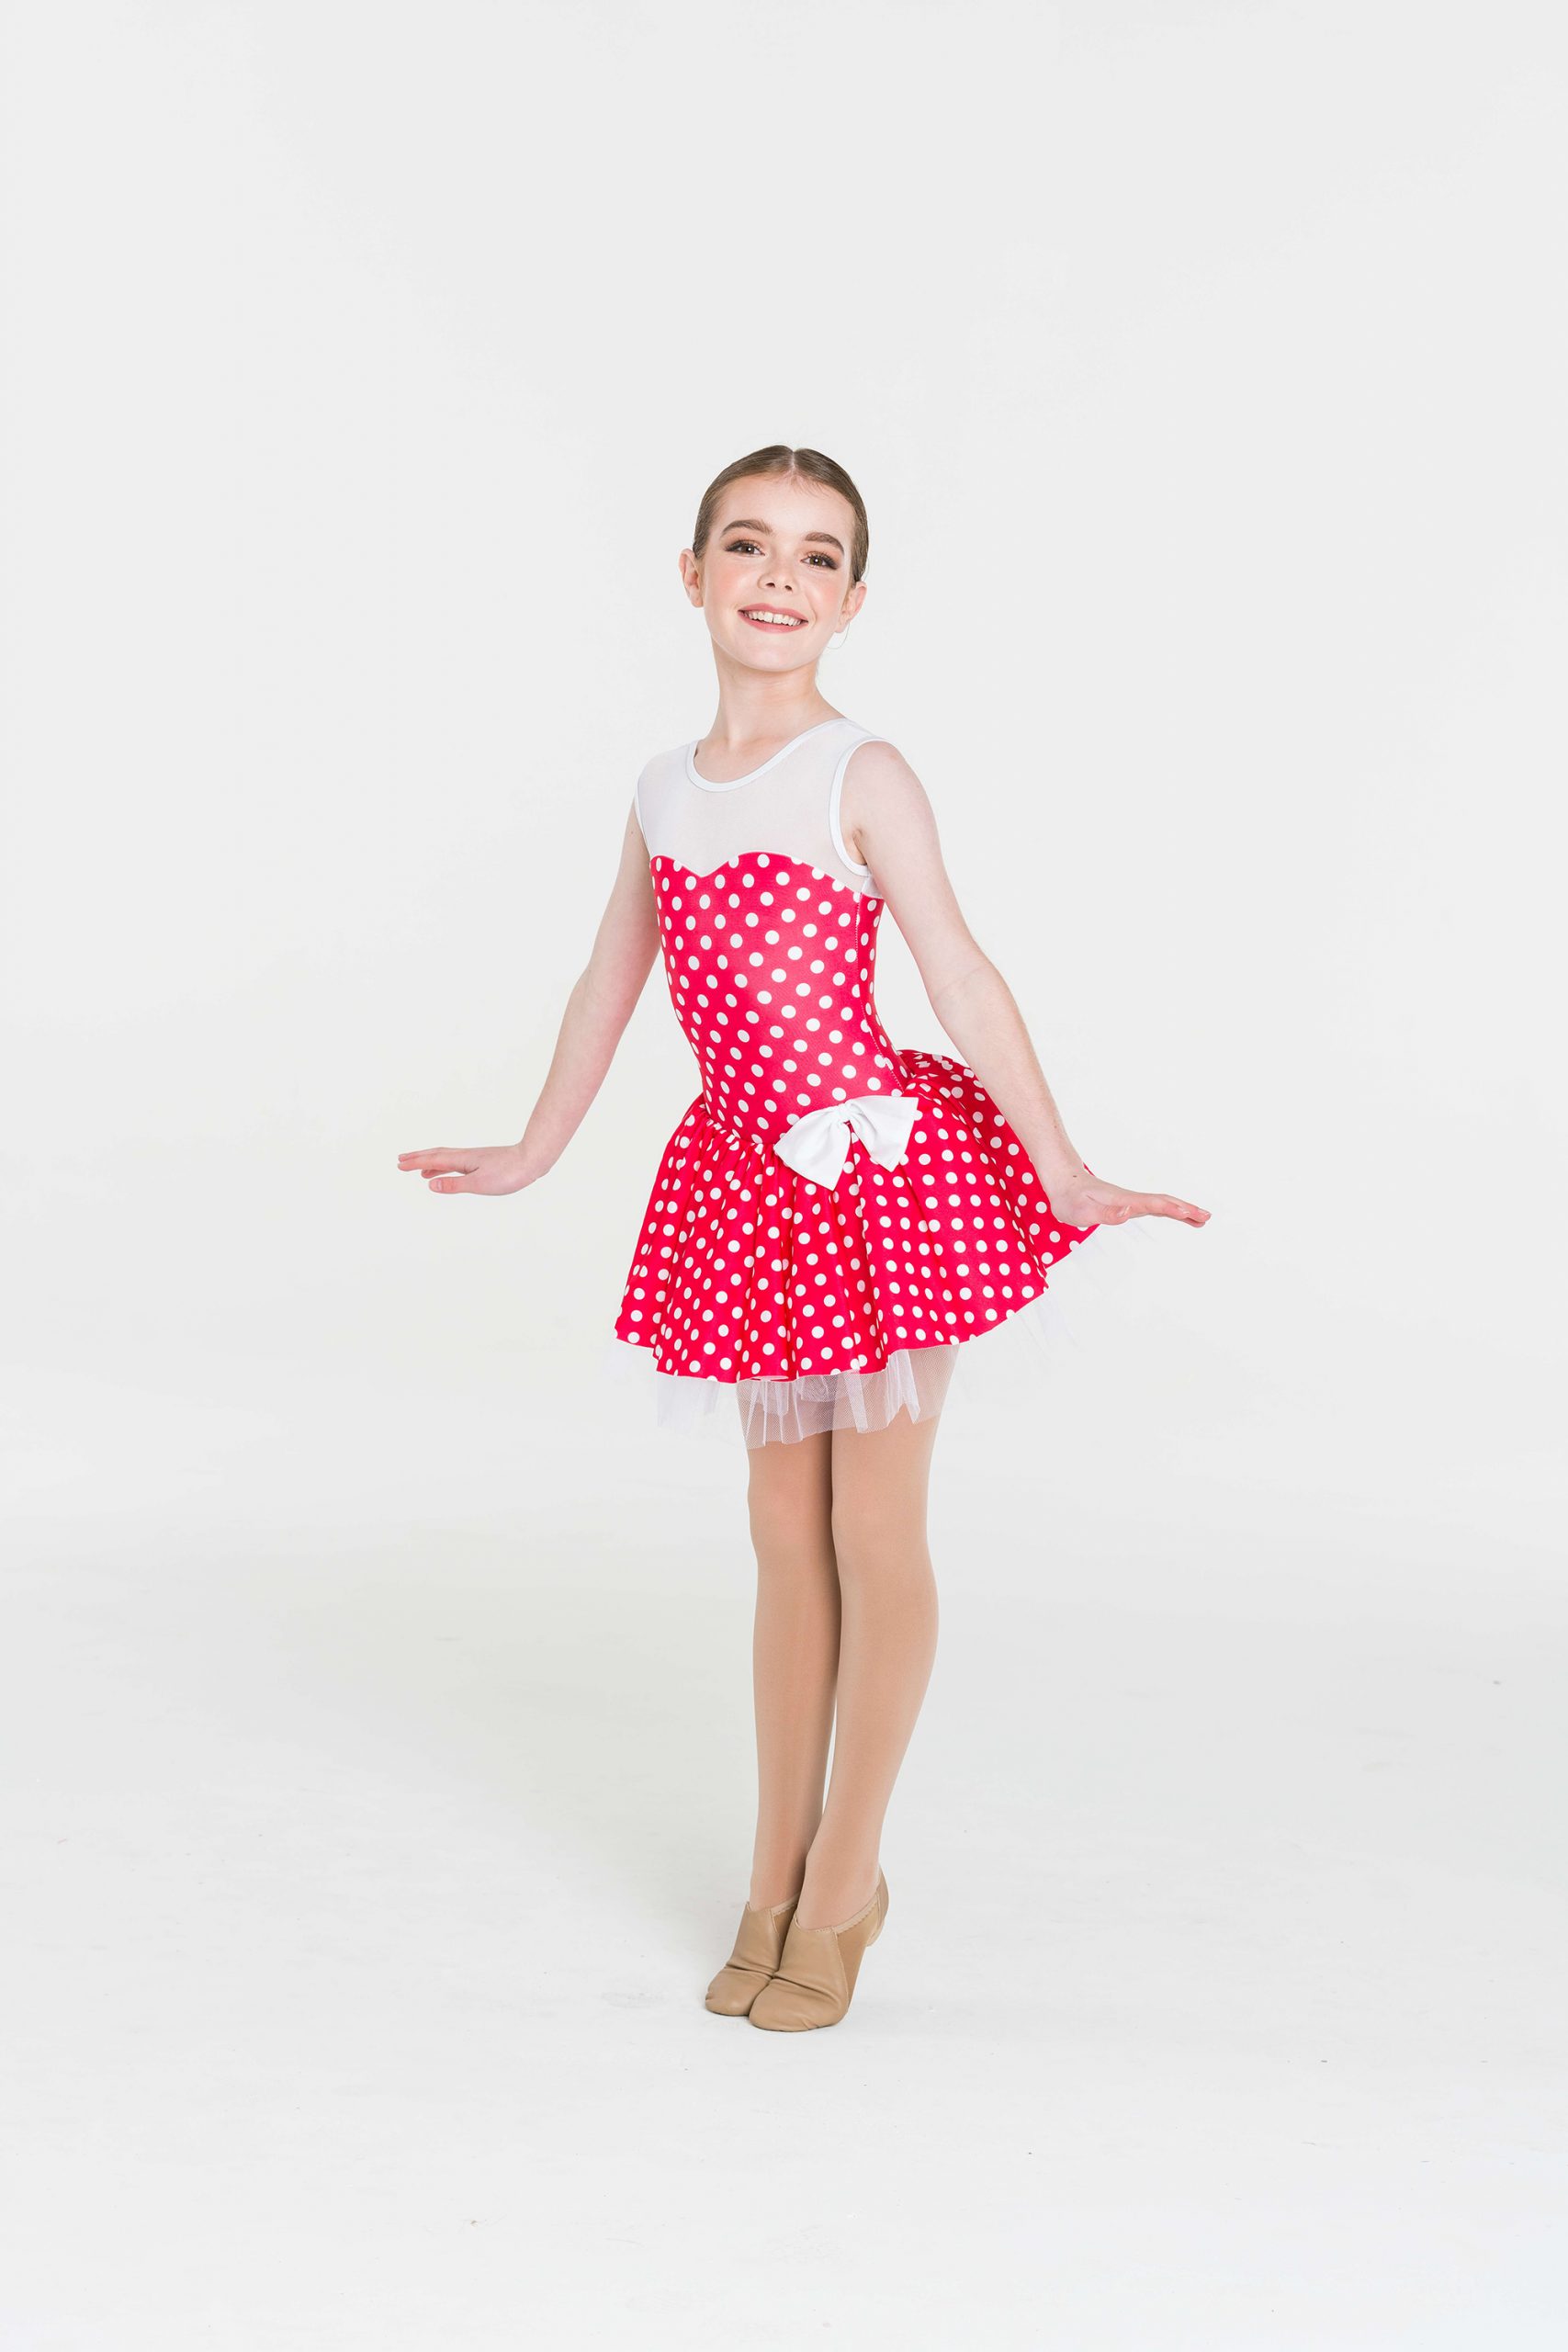 Studio 7 Dancewear | Polka Dot Princess Dress | Spotty Dress